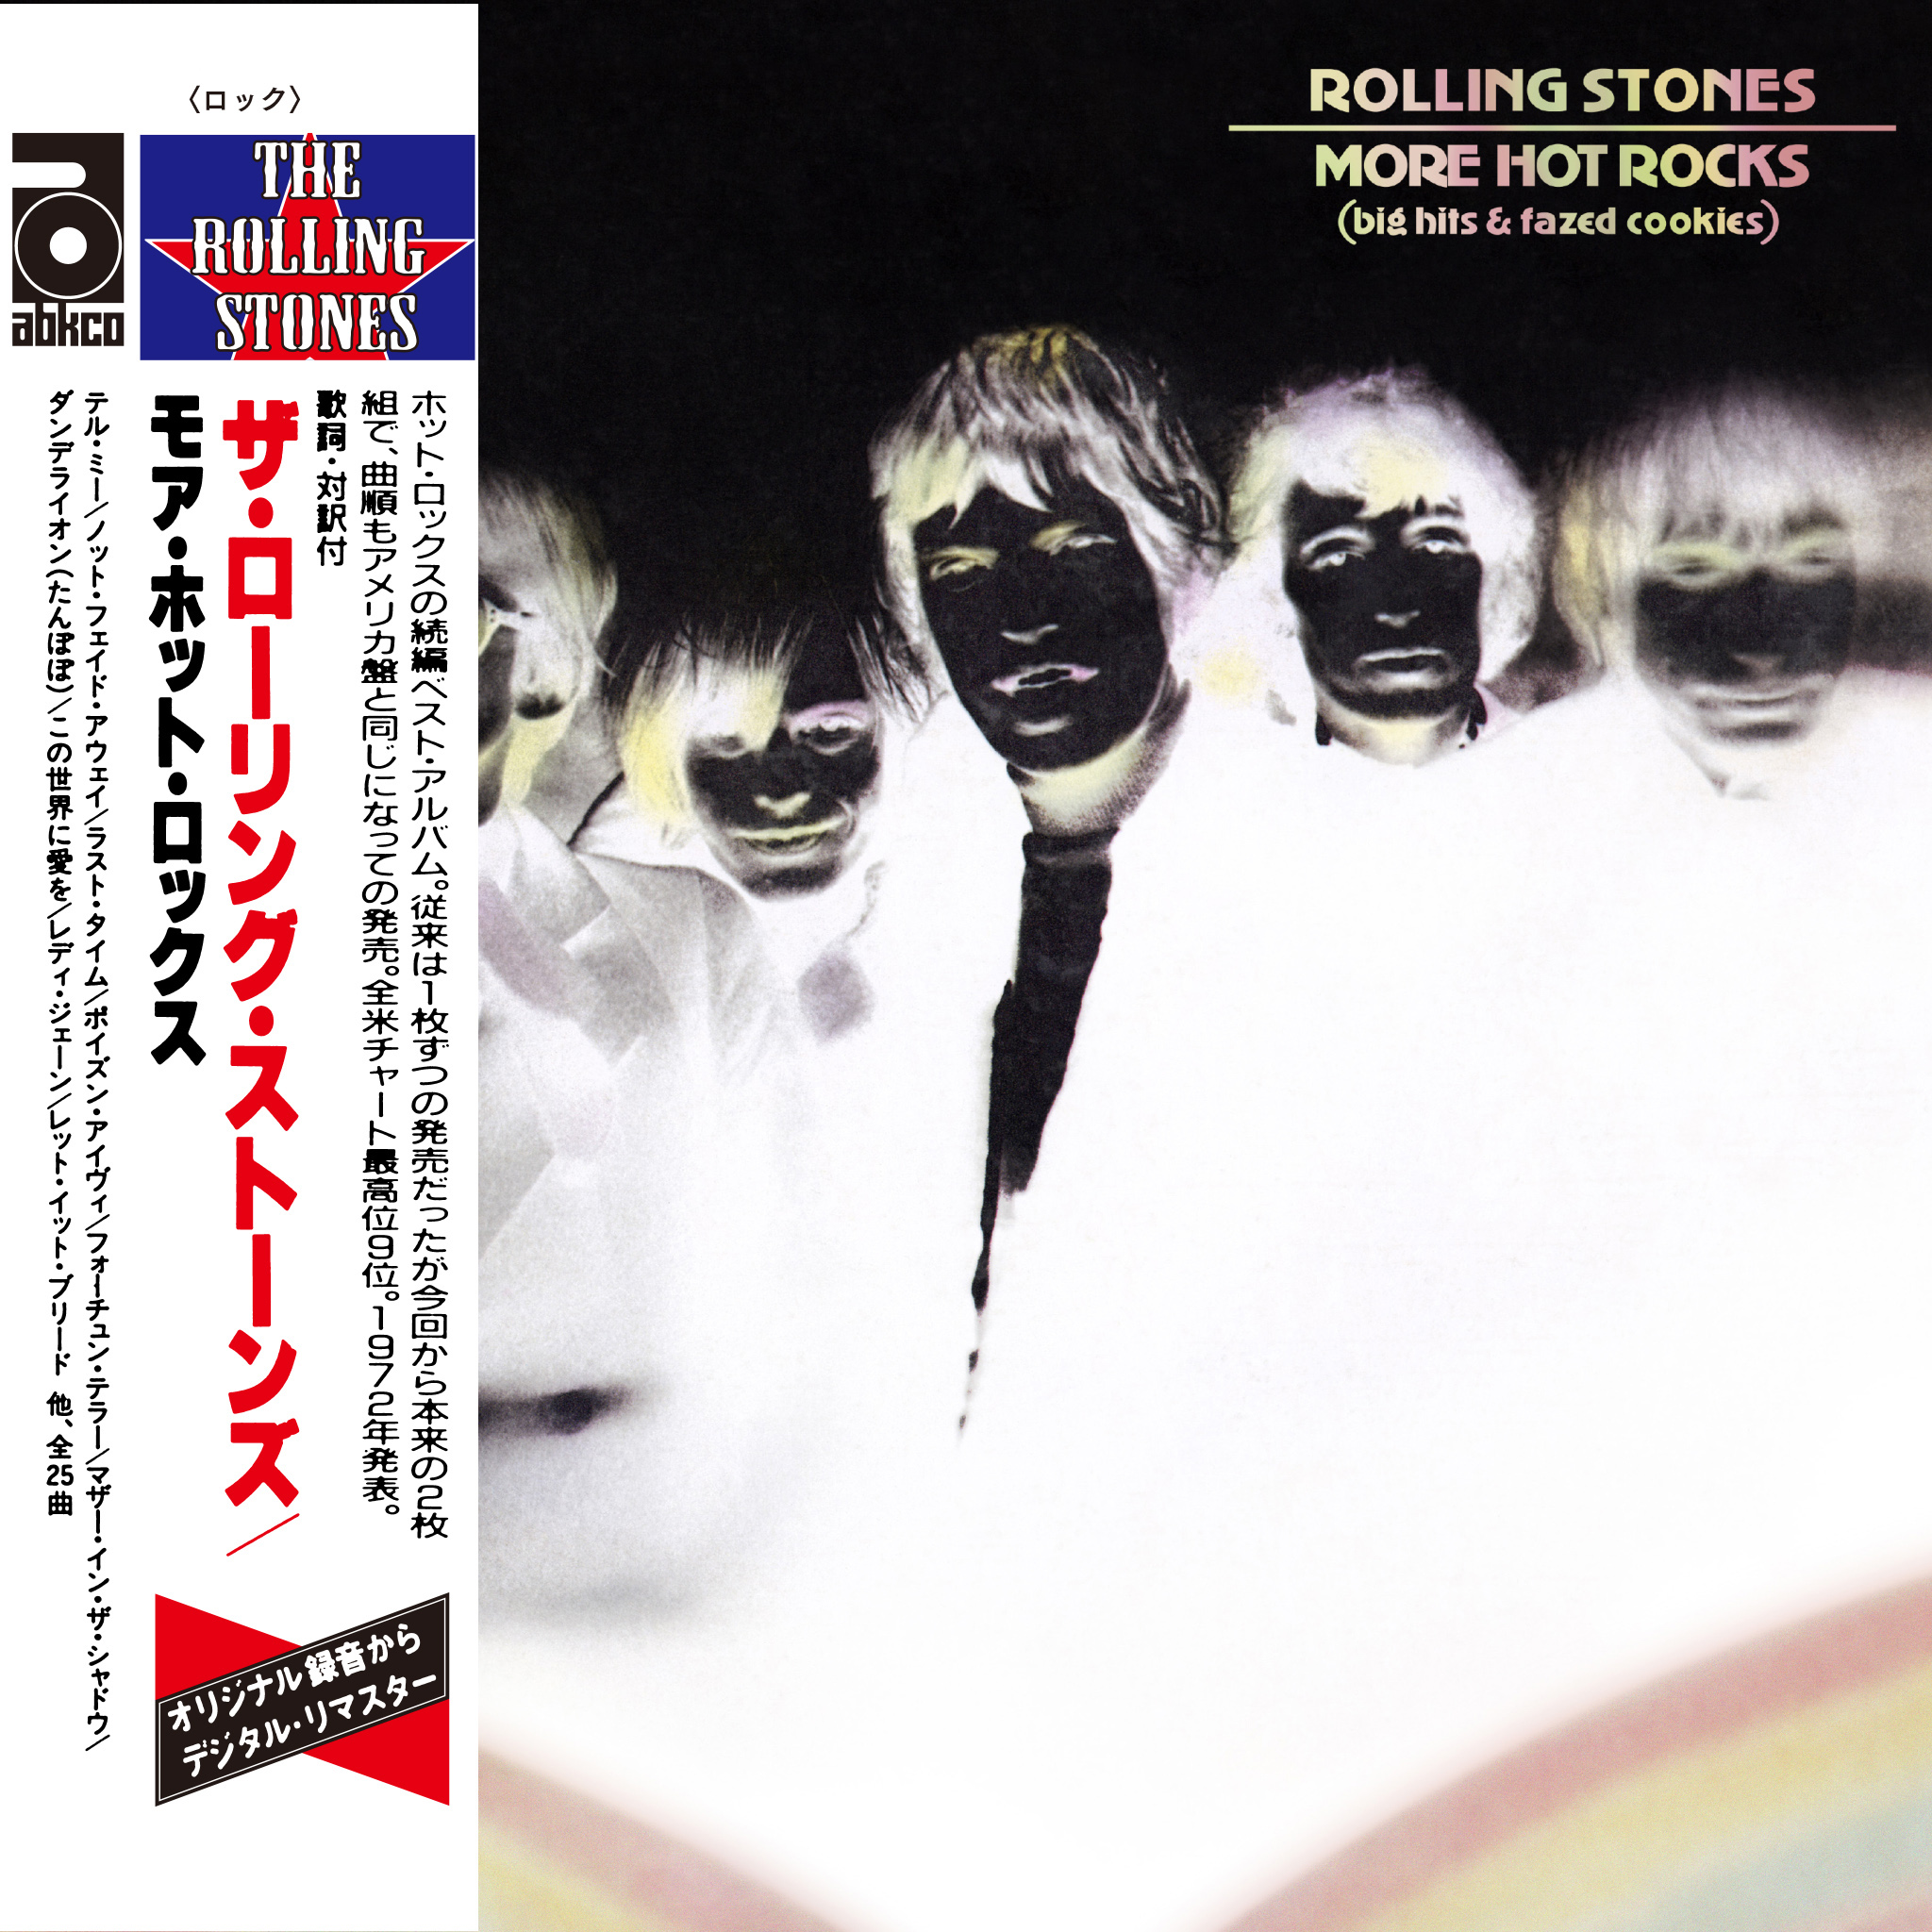 The rolling stones record 5枚組 ローリングストーンズ - 洋楽